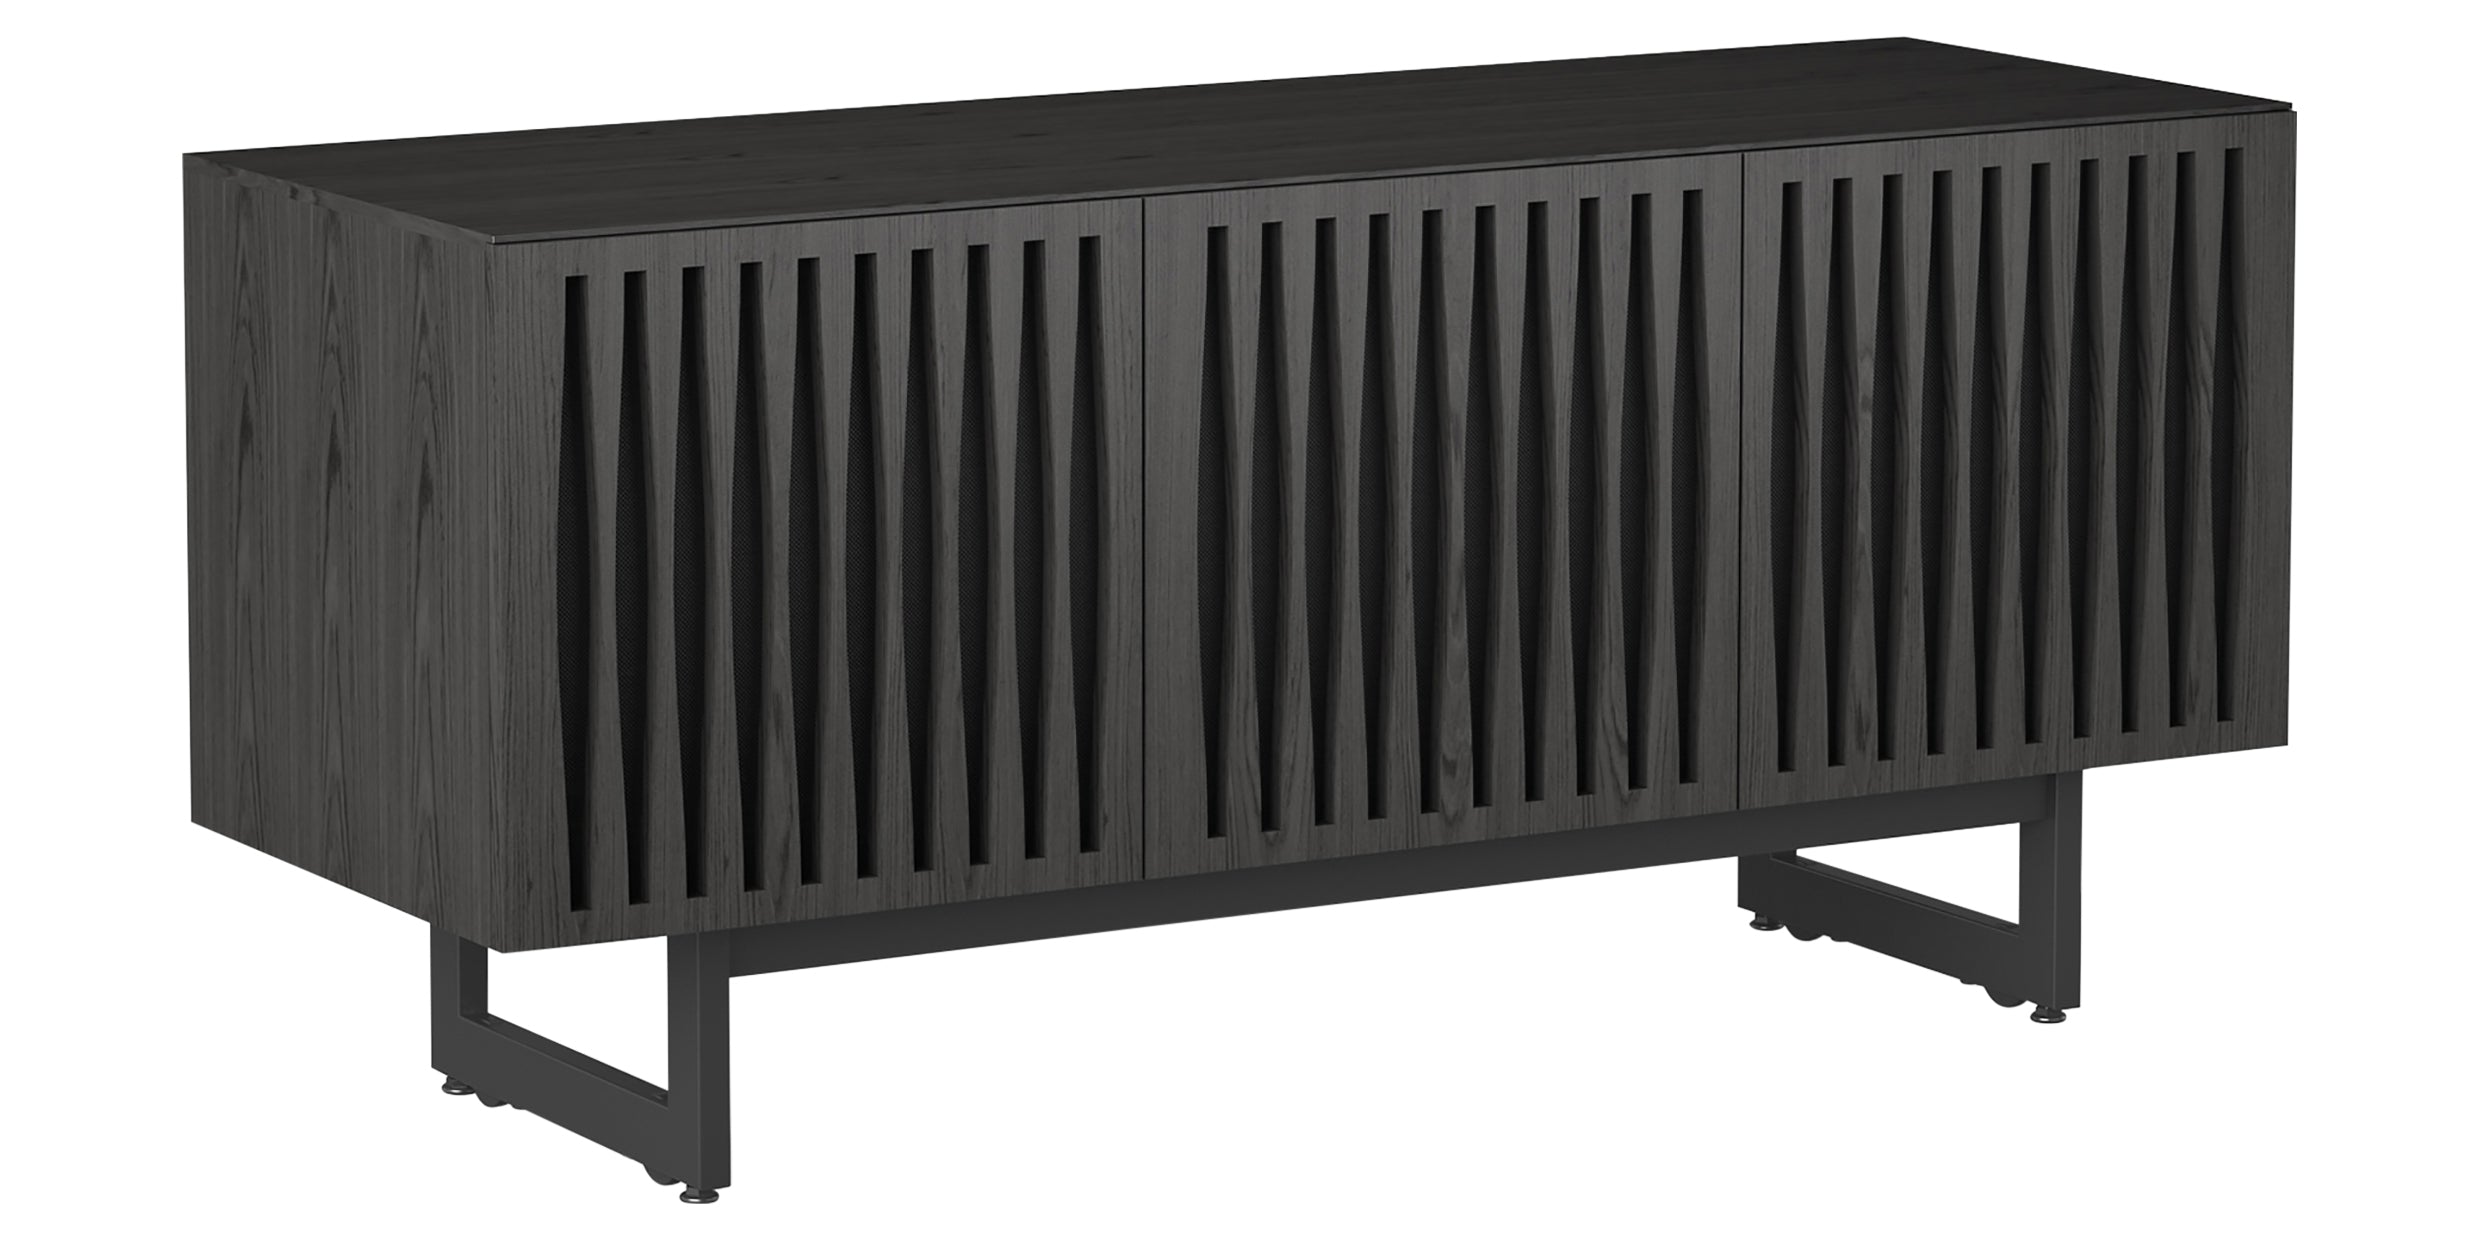 Charcoal Ash Veneer & Black Perforated Steel with Black Steel (Tempo) | BDI Elements Media Cabinet | Valley Ridge Furniture